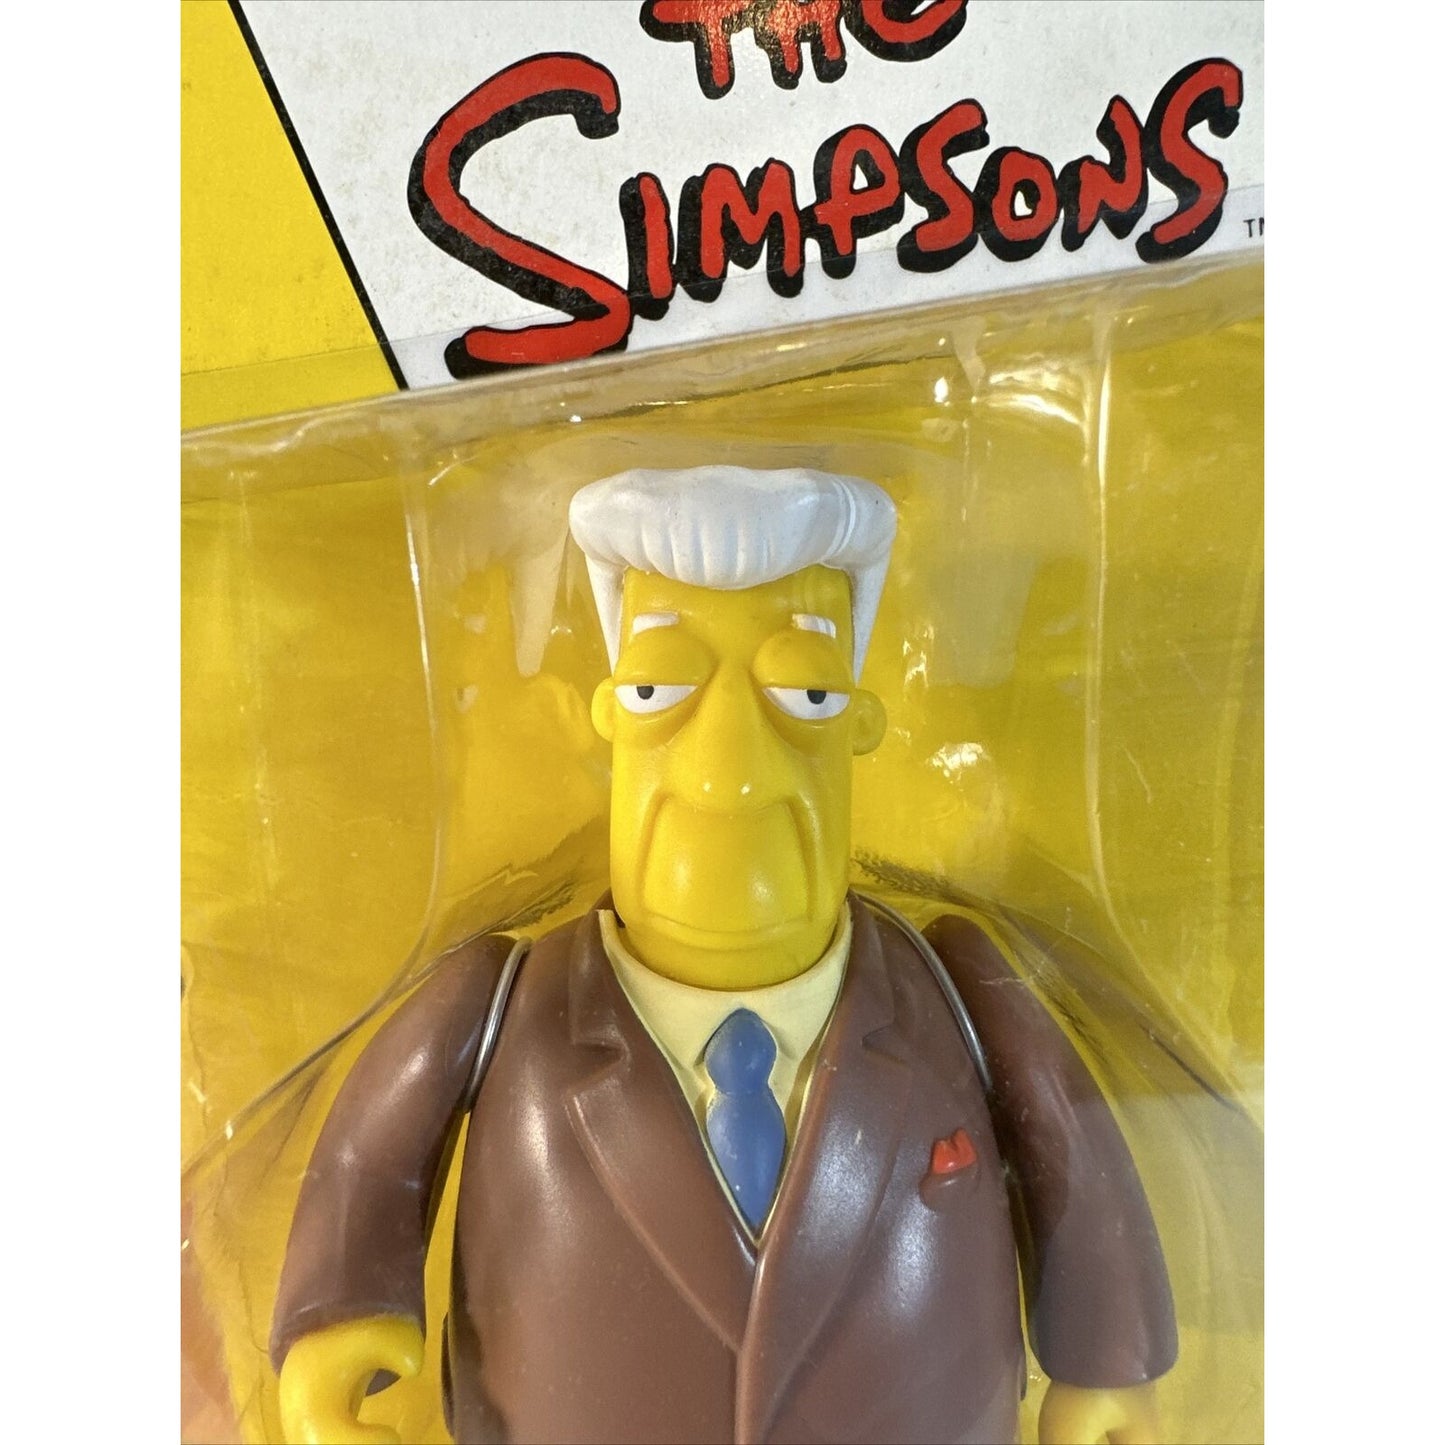 The Simpsons Kent Brockman Series 5 World of Springfield Action Figure Playmates